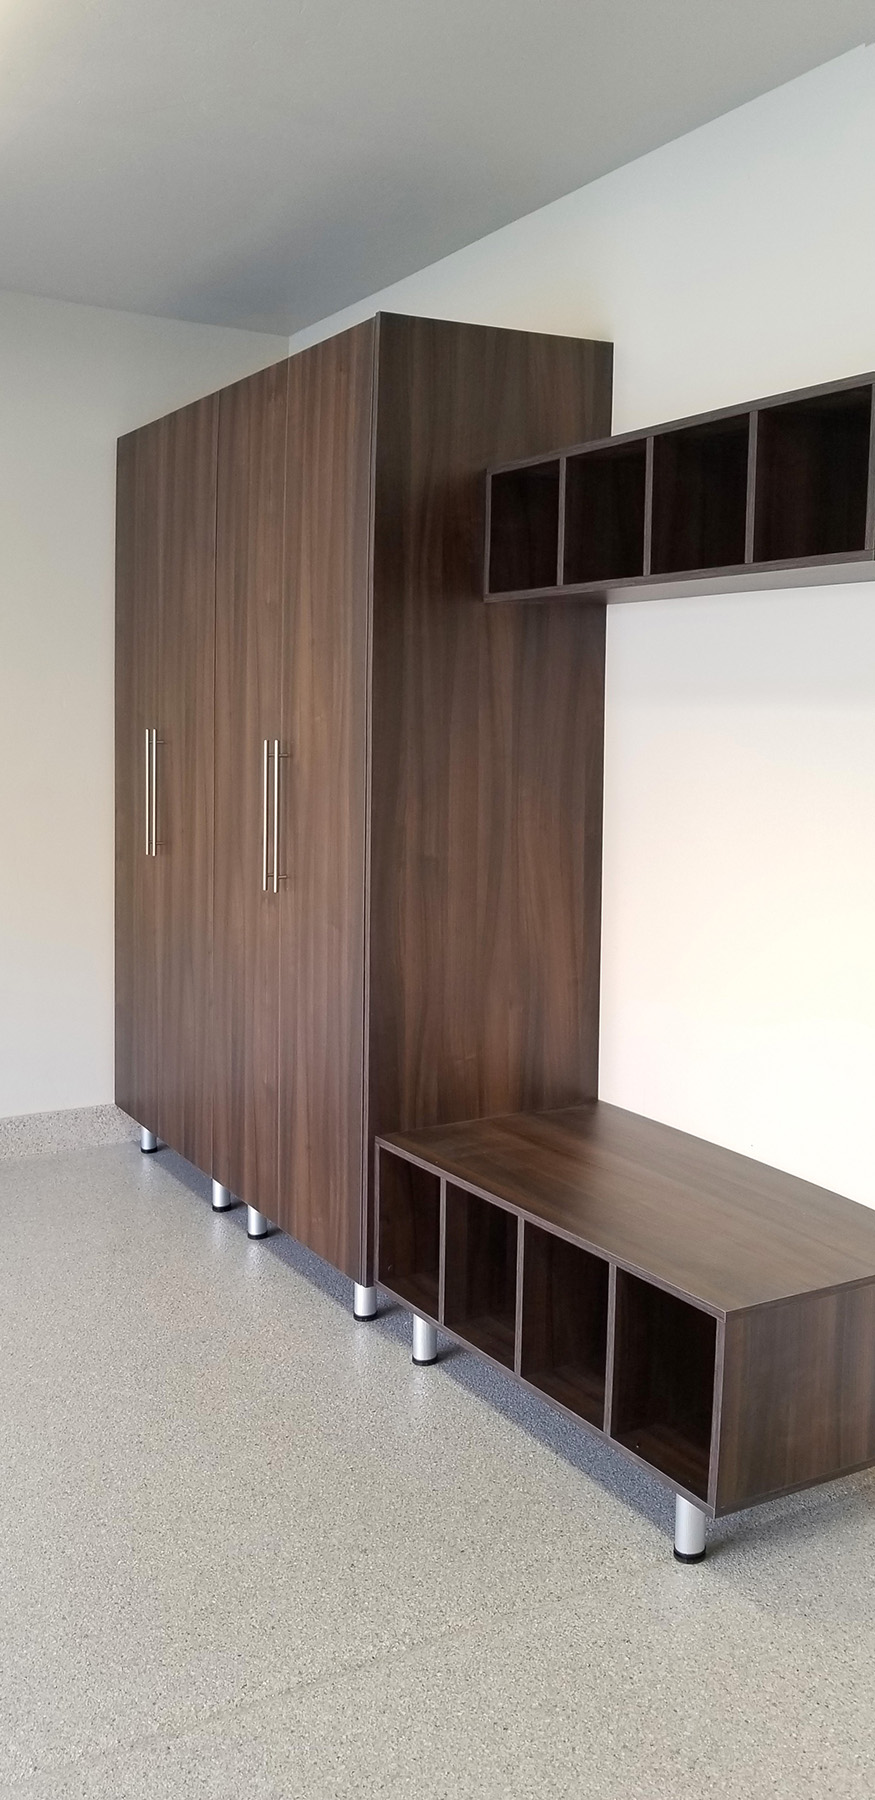 Utah-garage-brown-cabinets